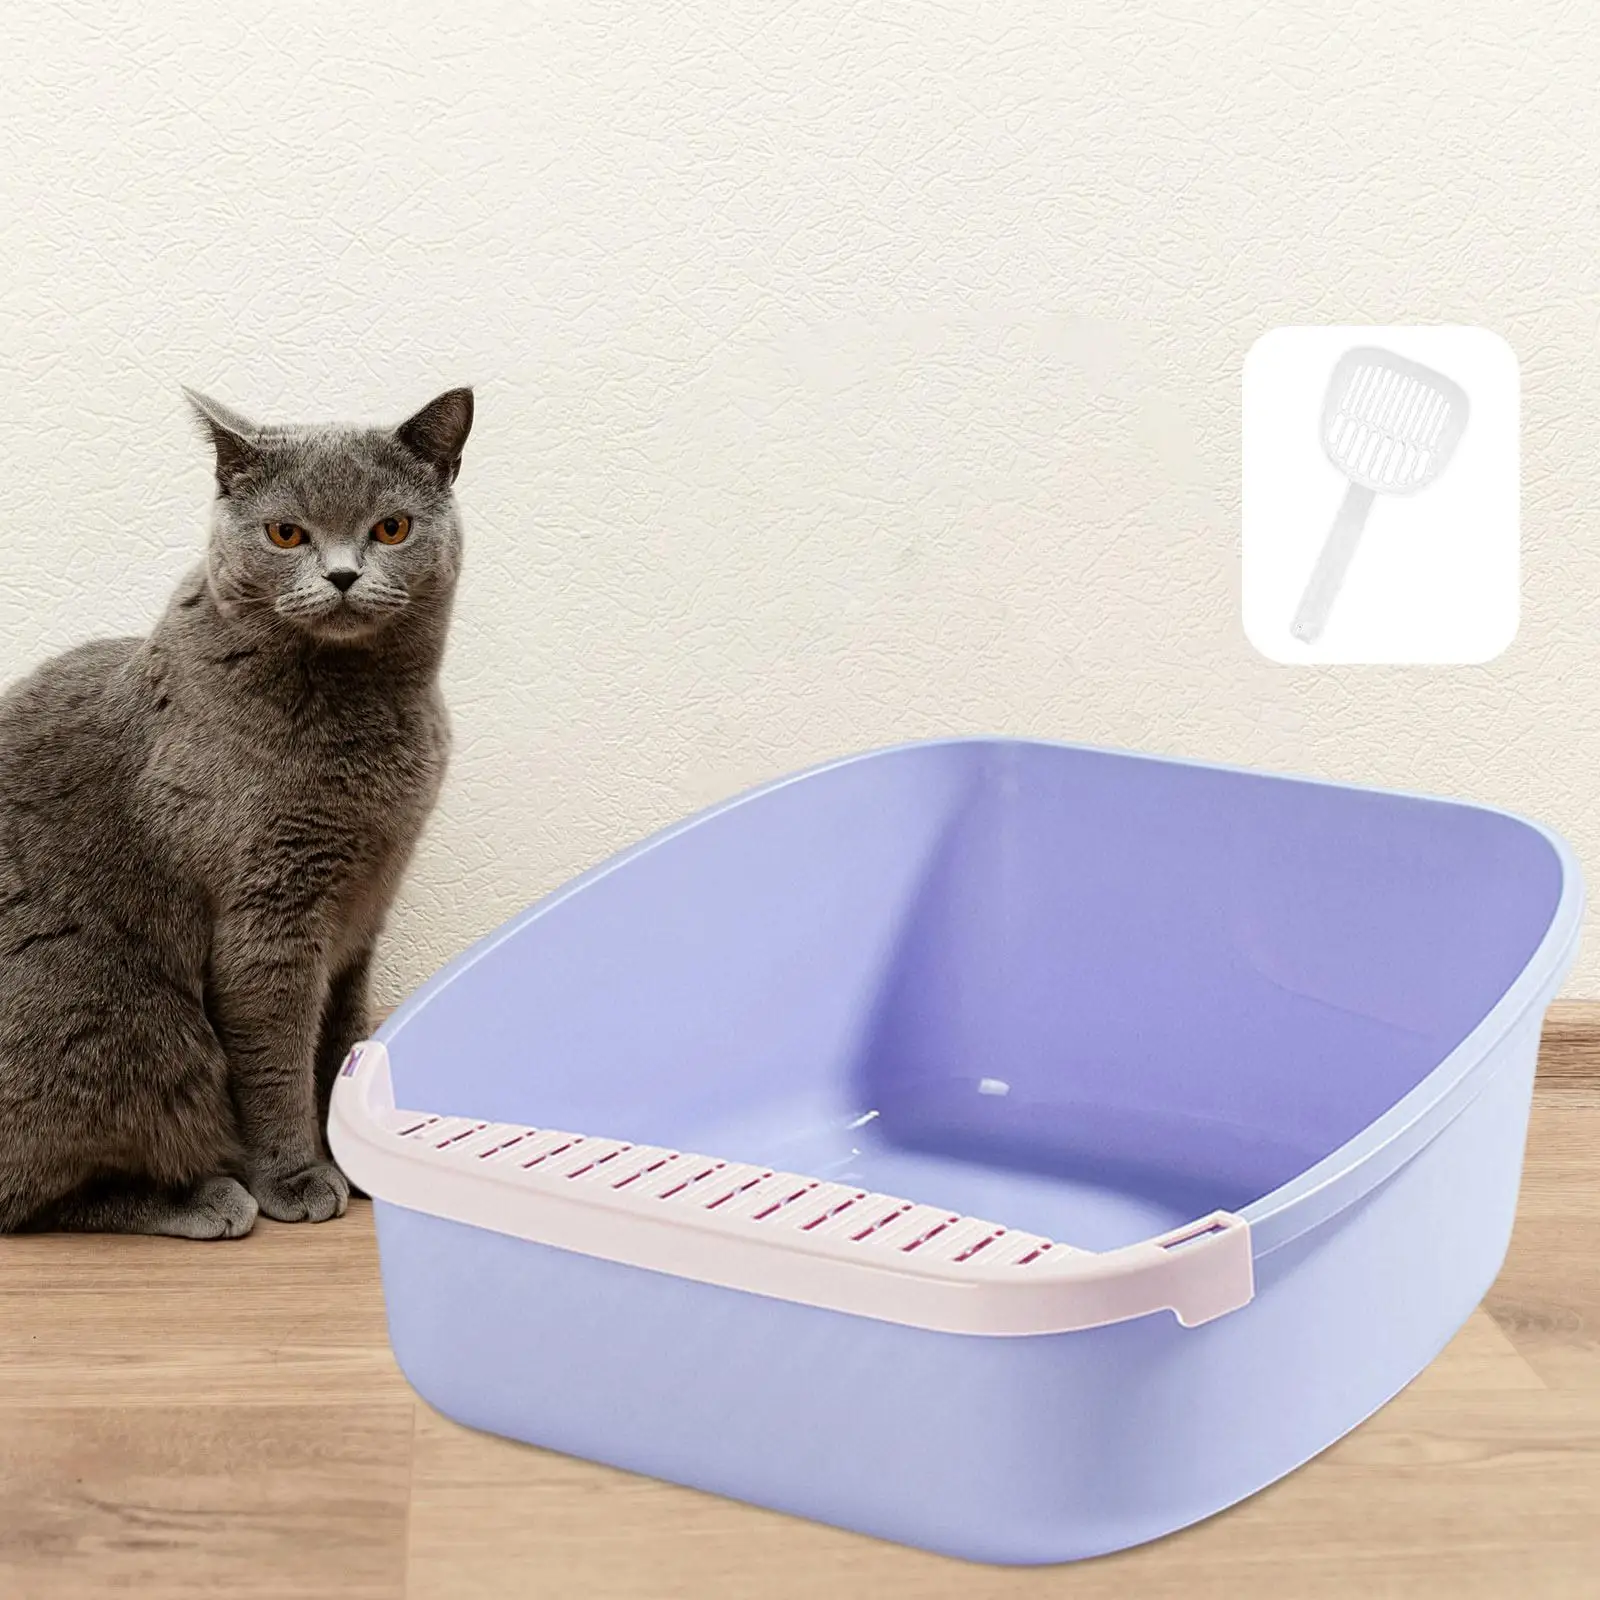 Cat Litter Box Bedpan Cat Potty Pan Cat Bedpan for Travel Supplies